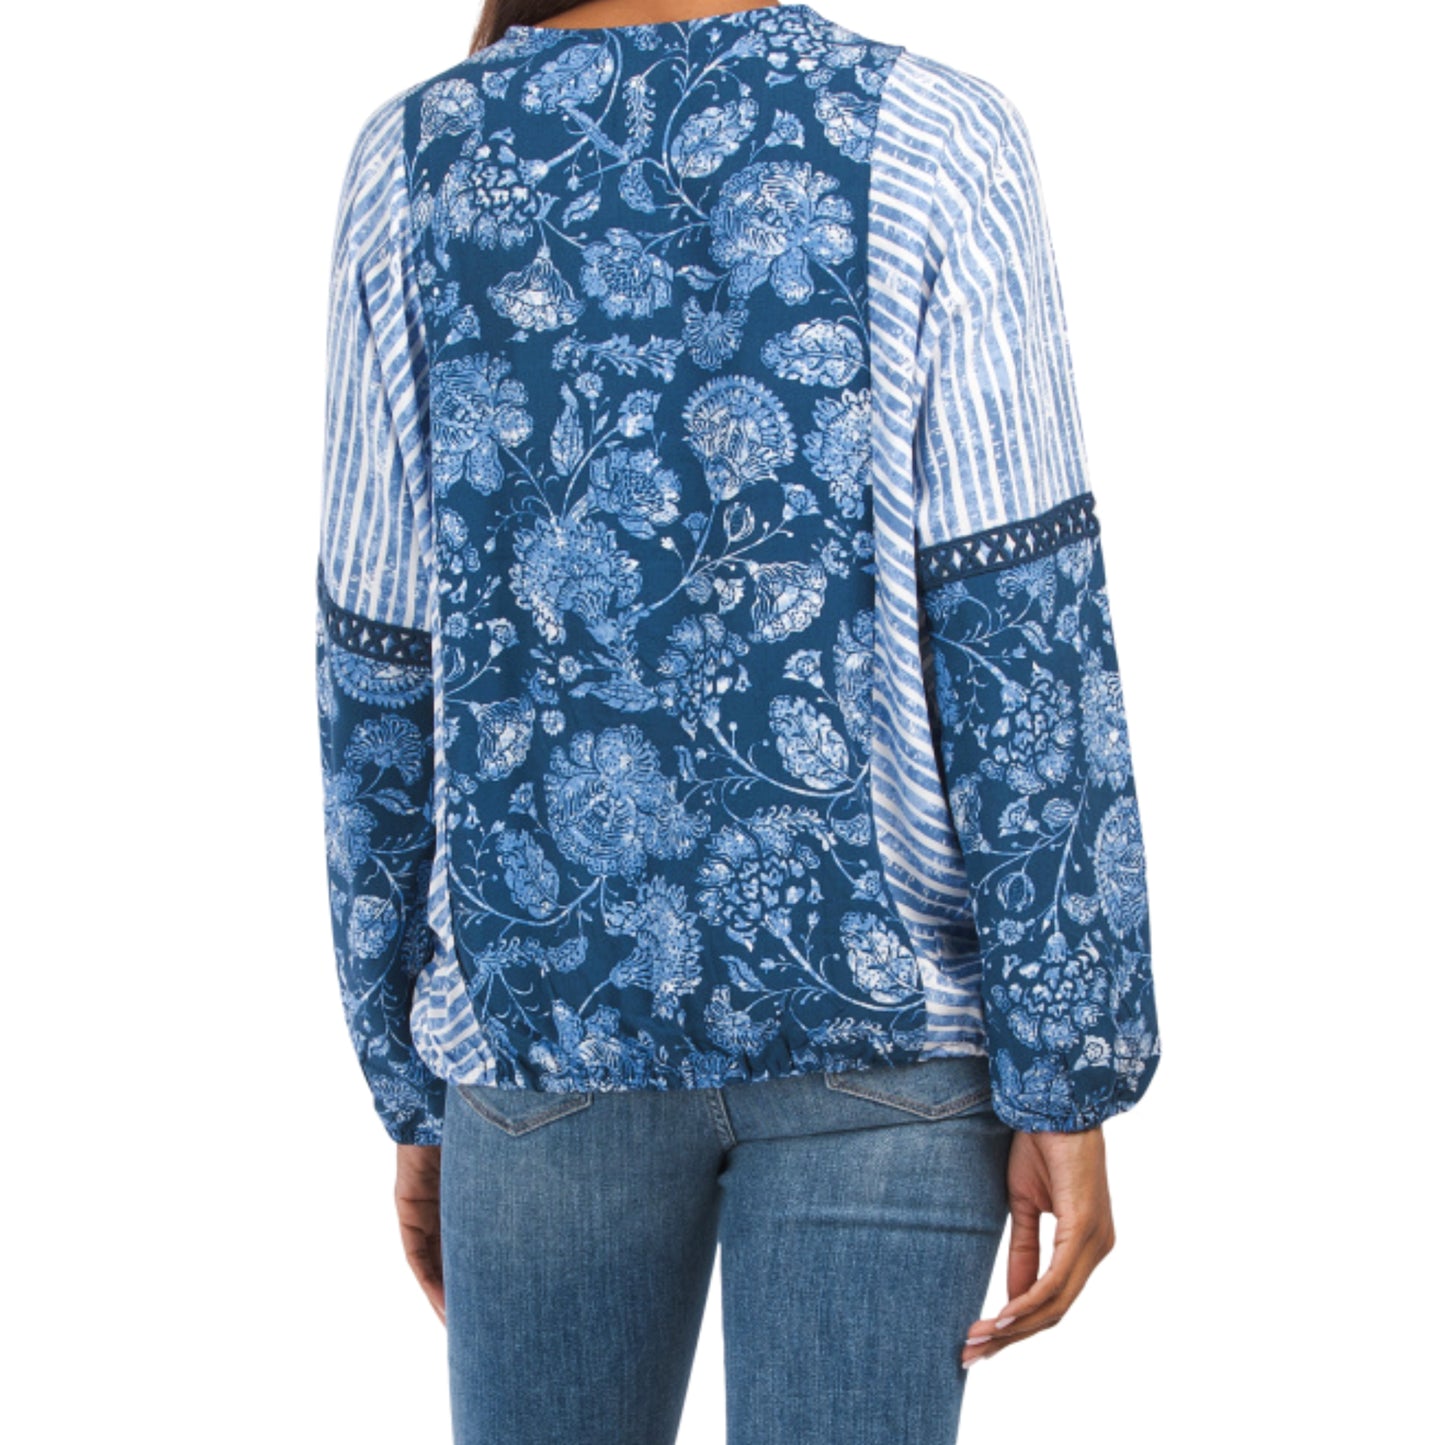 Spense Women's Boho Floral Print Crochet Detail Long Sleeve Blouse Tunic